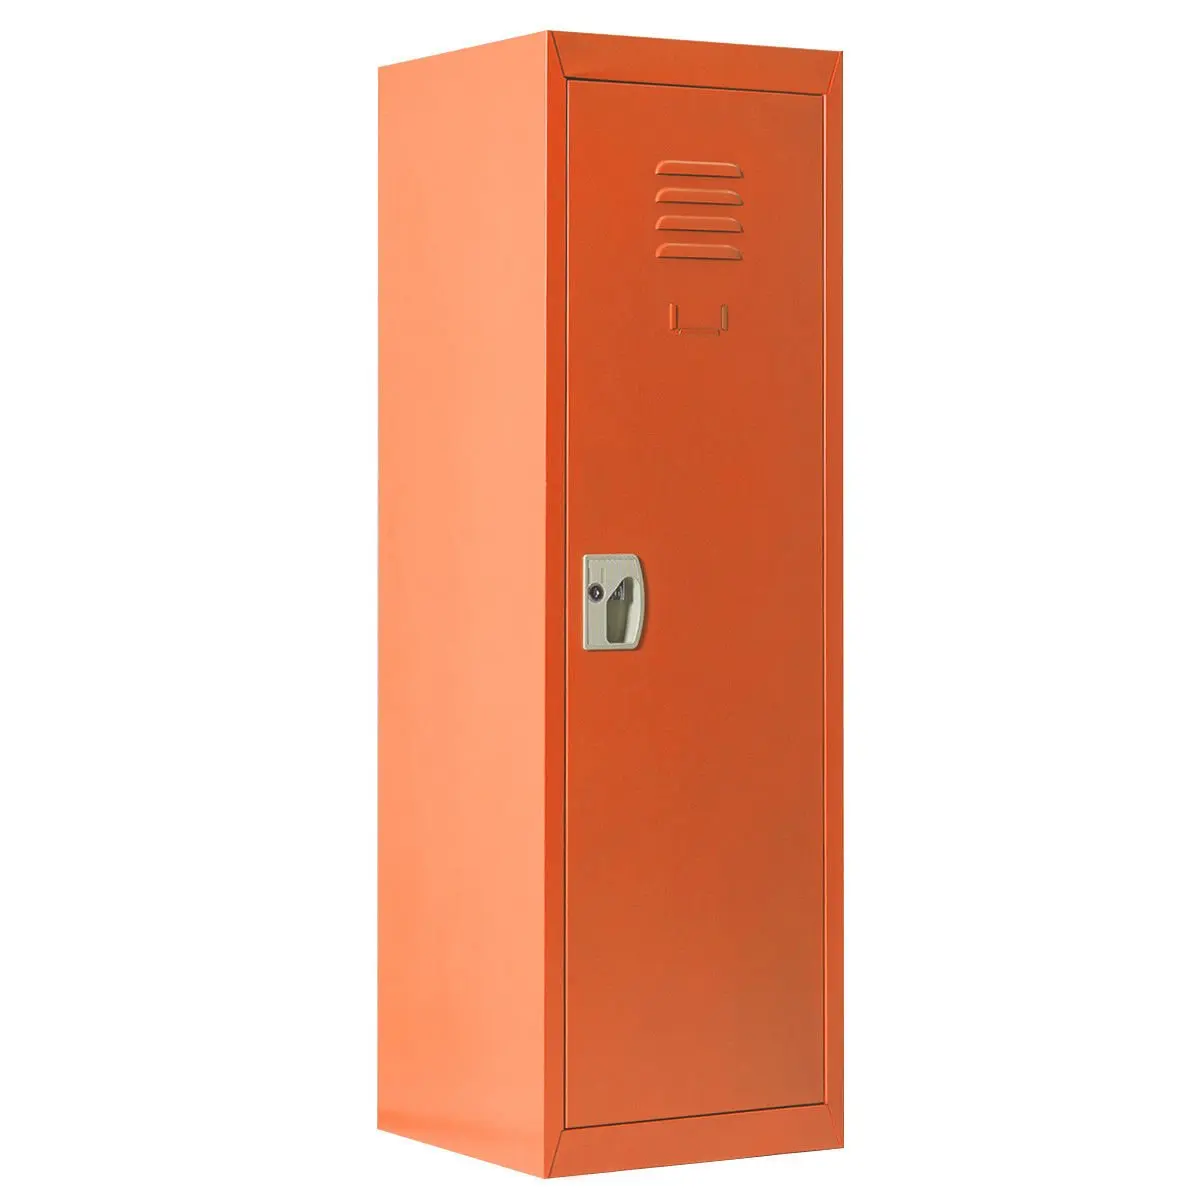 AdirOffice Kids Steel Metal Storage Locker 24 Inch, Red with Key /& Hanging Rods for Home /& School